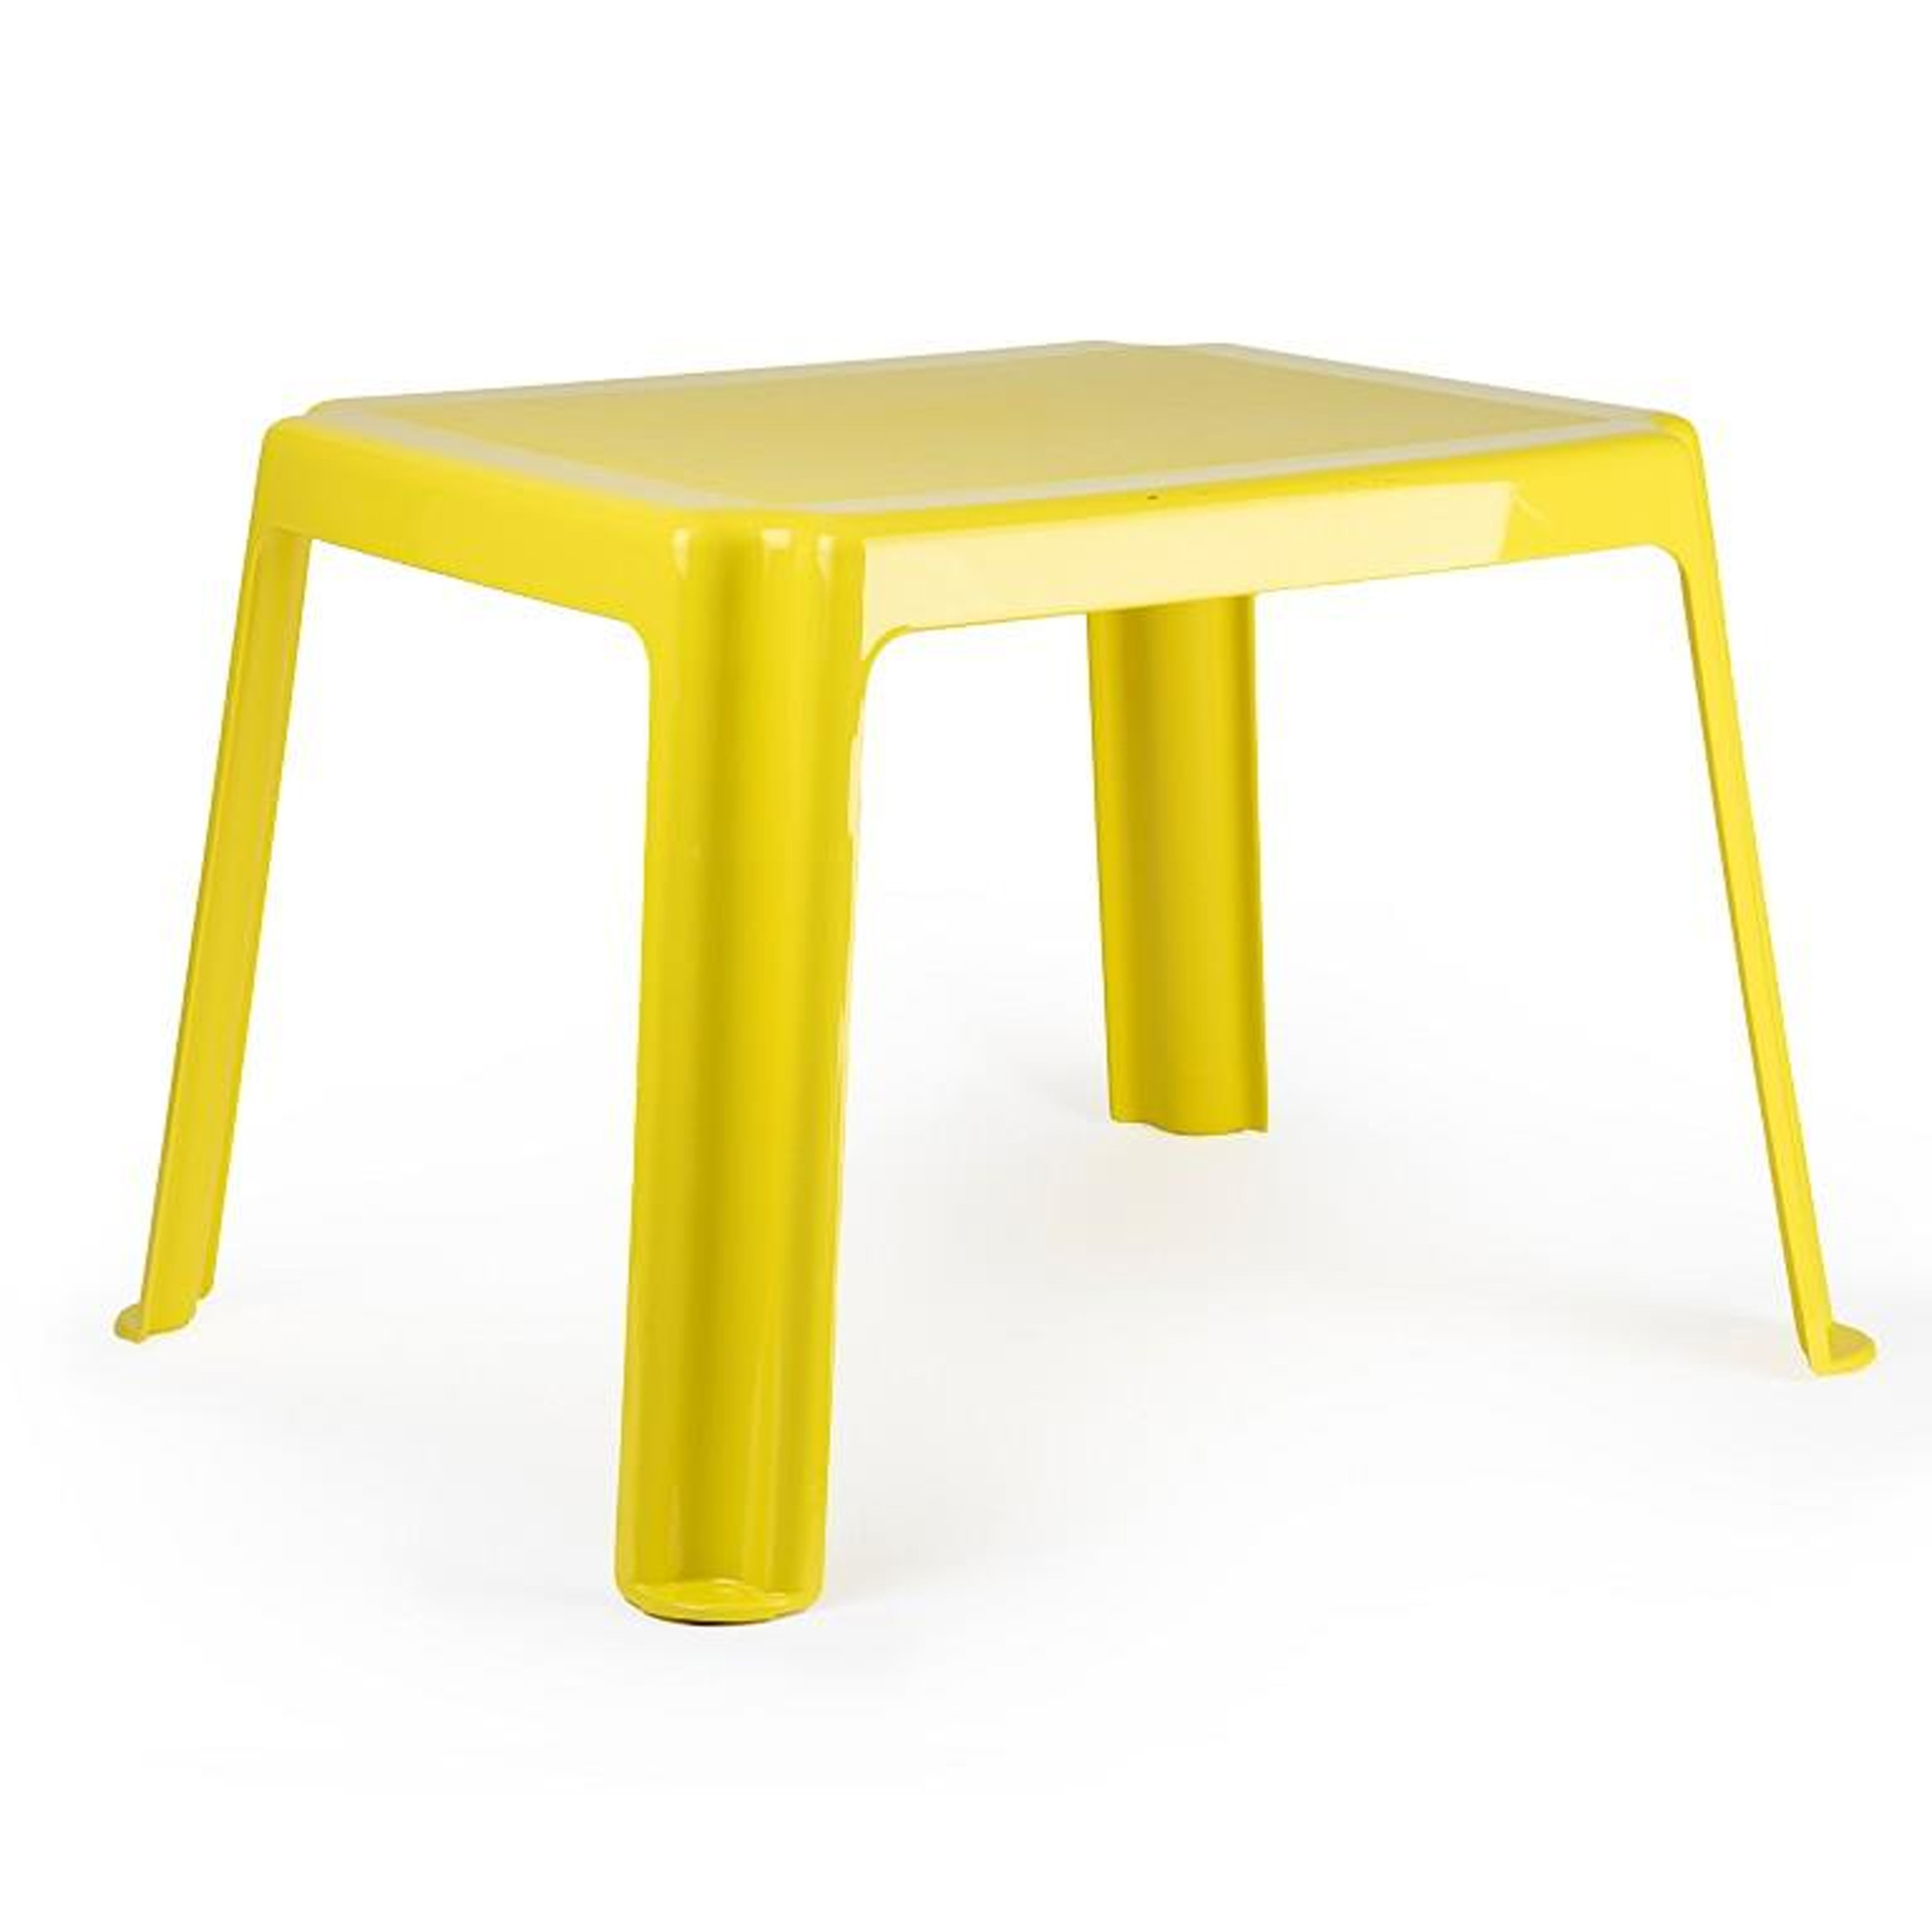 Plasticforte Kunststof kindertafel geel 55 x 66 x 43 cm camping-tuin-kinderkamer